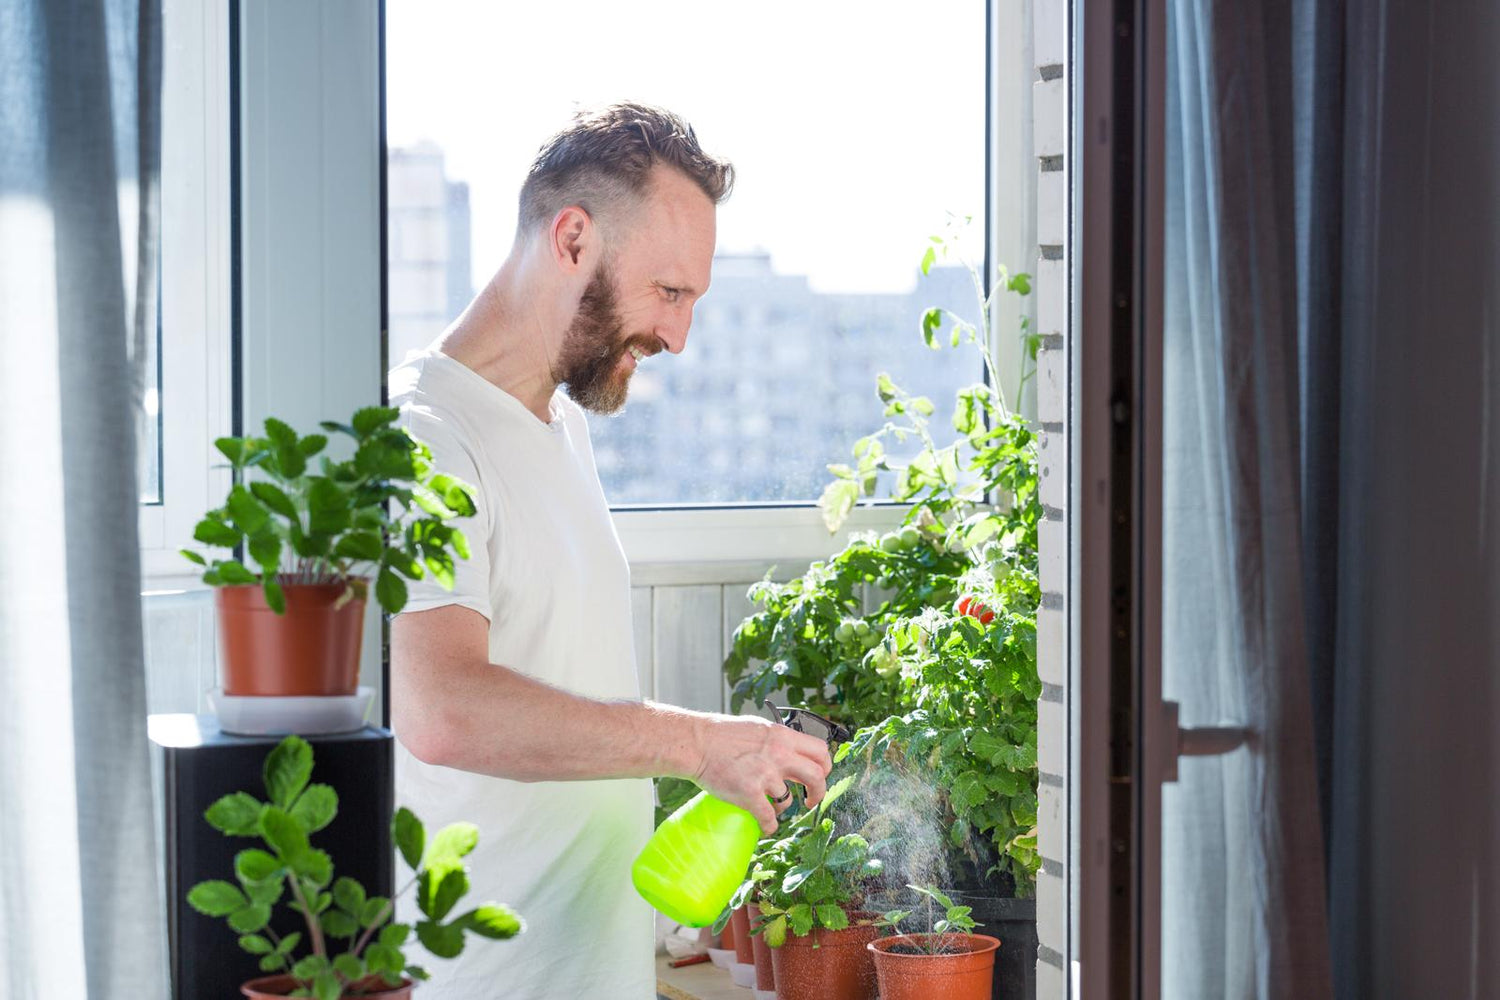 How to start a garden in an apartment